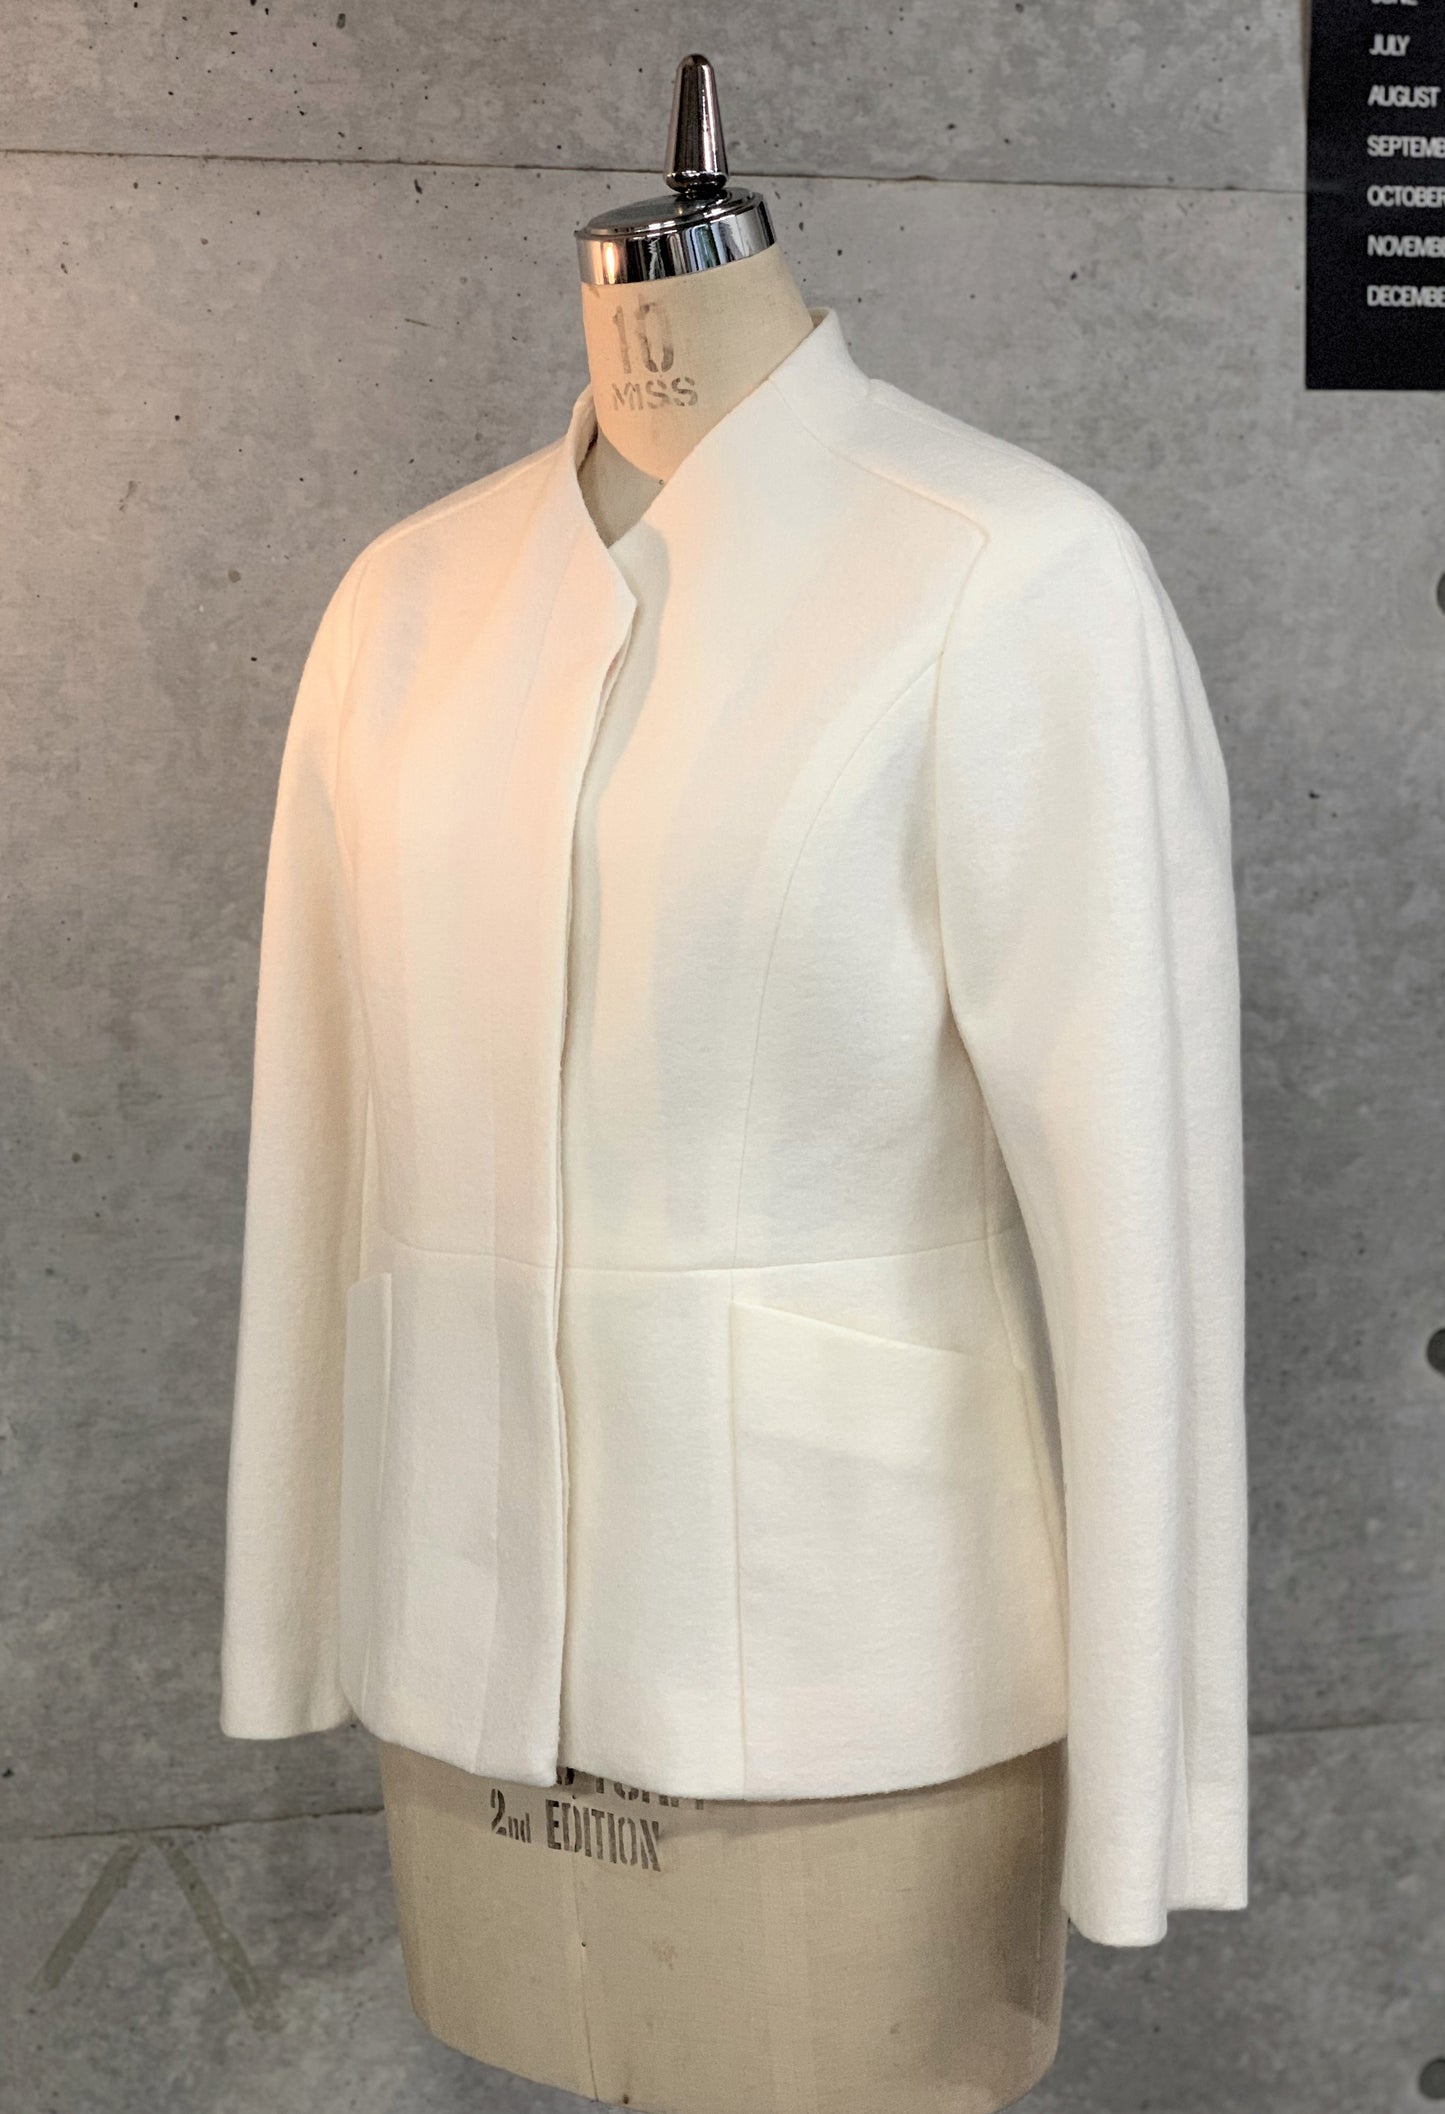 Peplum Jacket in White Wool